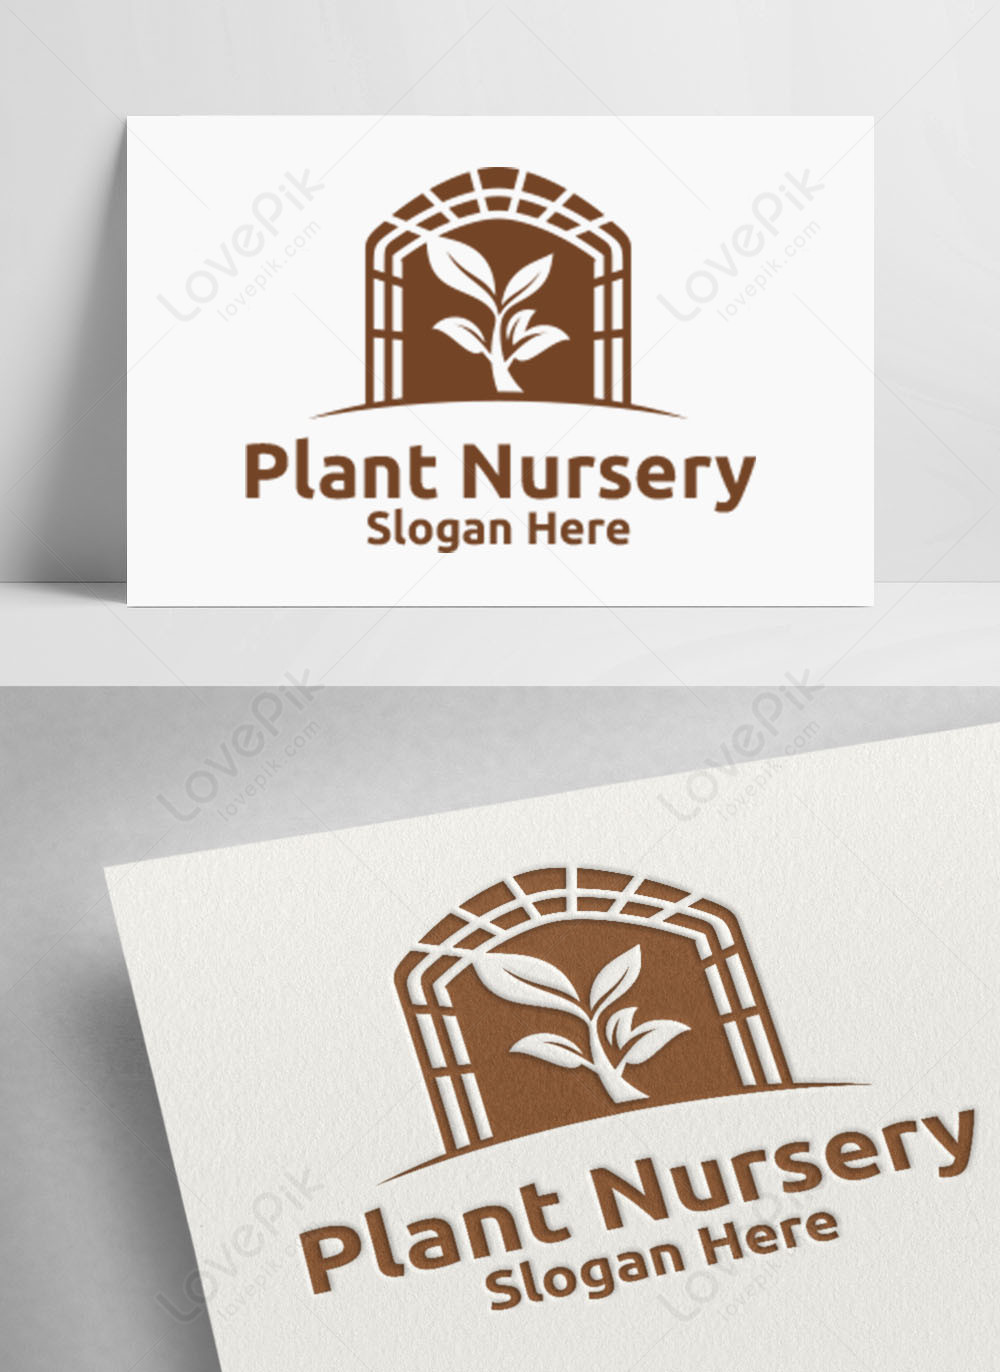 Corporate Identity Design Green Paradise Nursery :: Behance